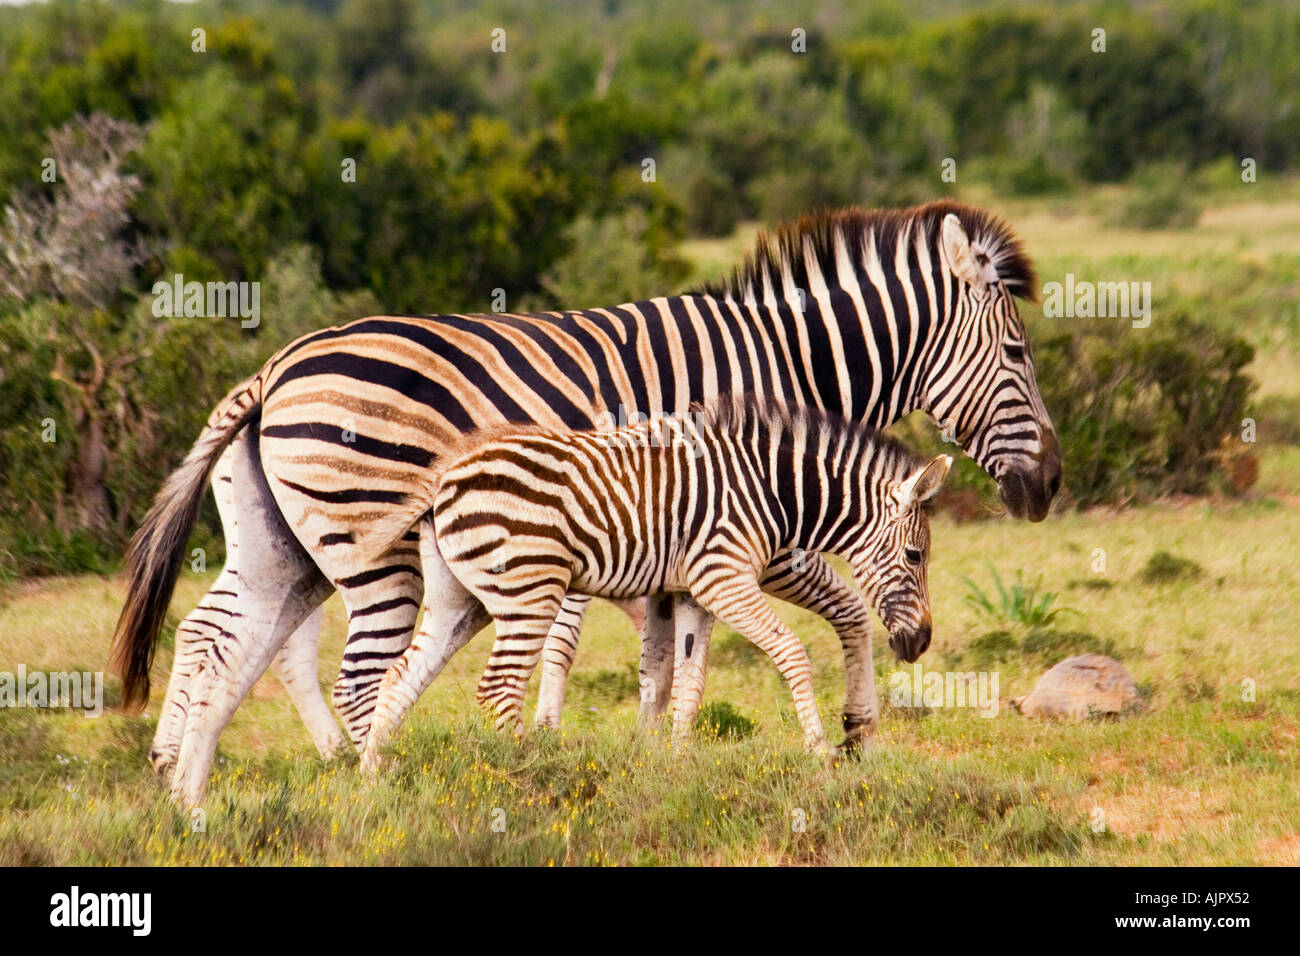 south africa Addo Elephant National Park herd of Zebra Stock Photo